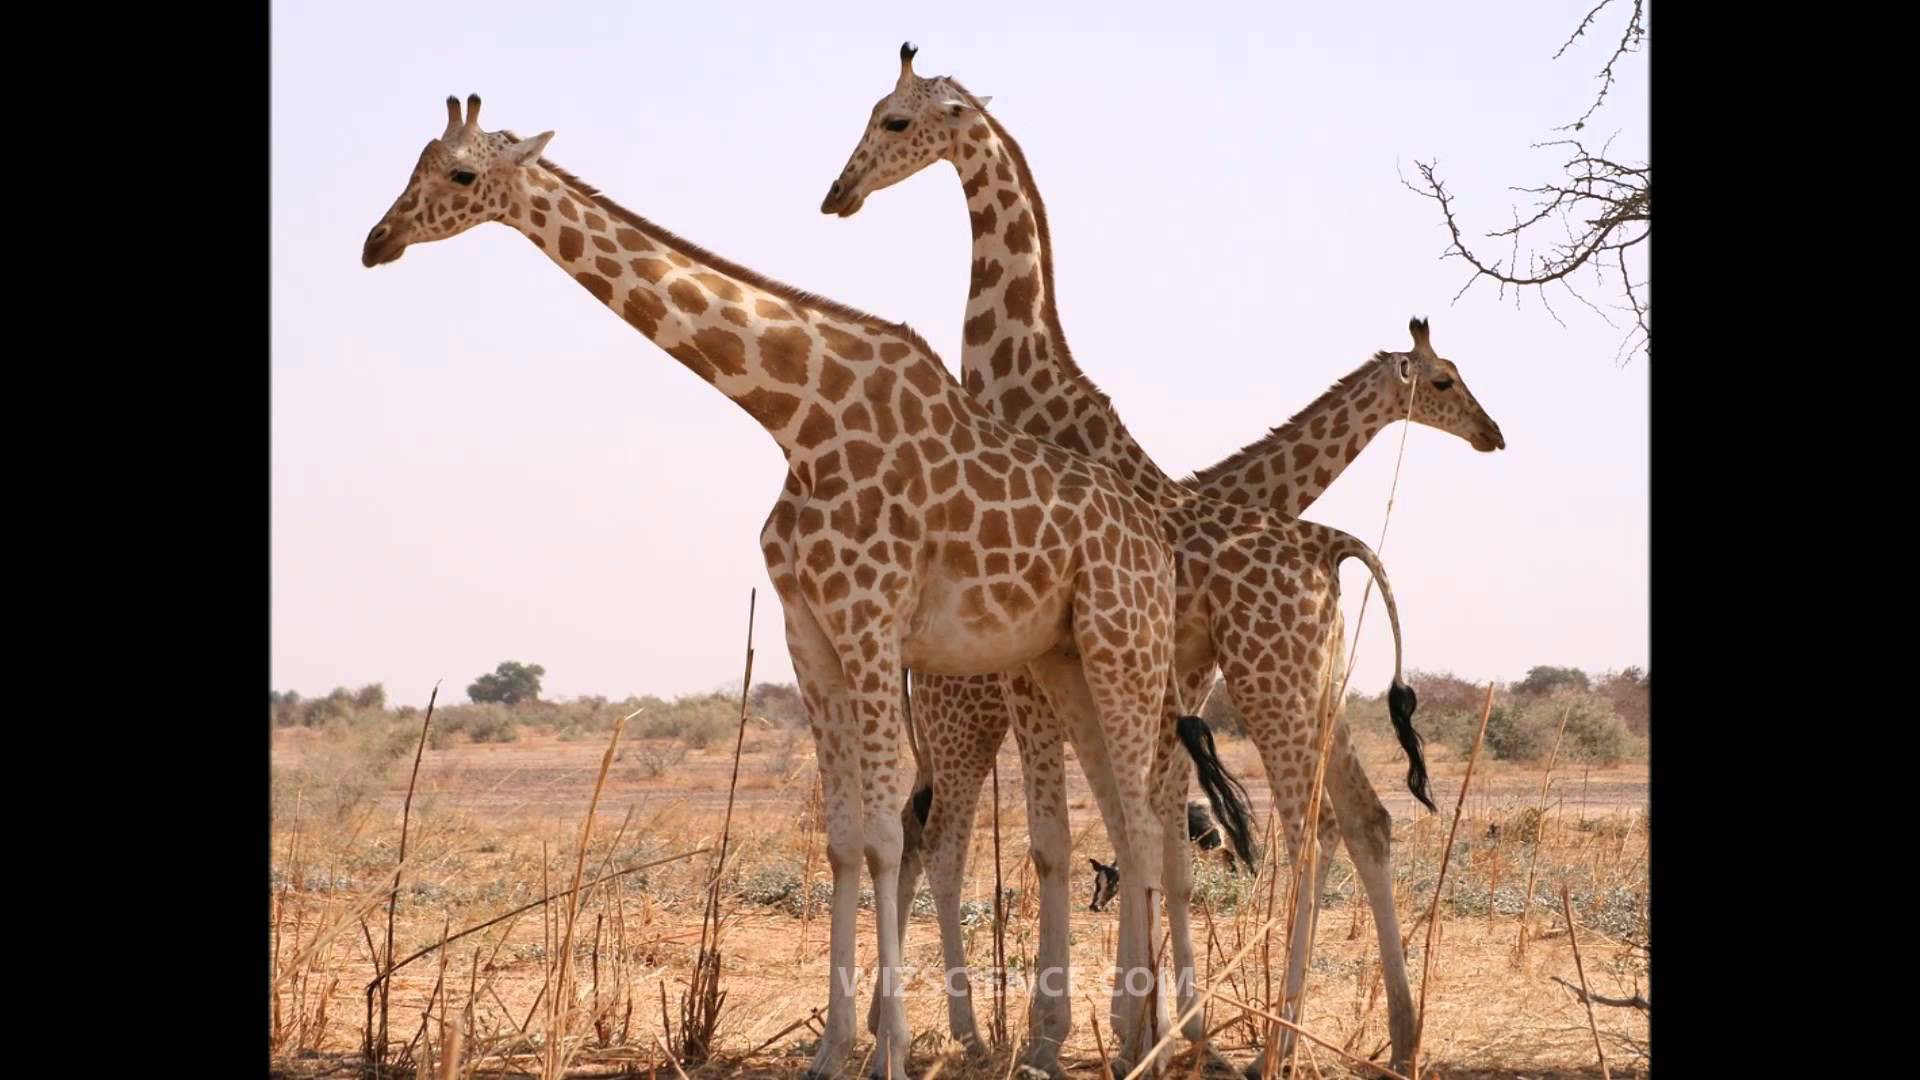 West African giraffe - Video Learning - WizScience.com - YouTube